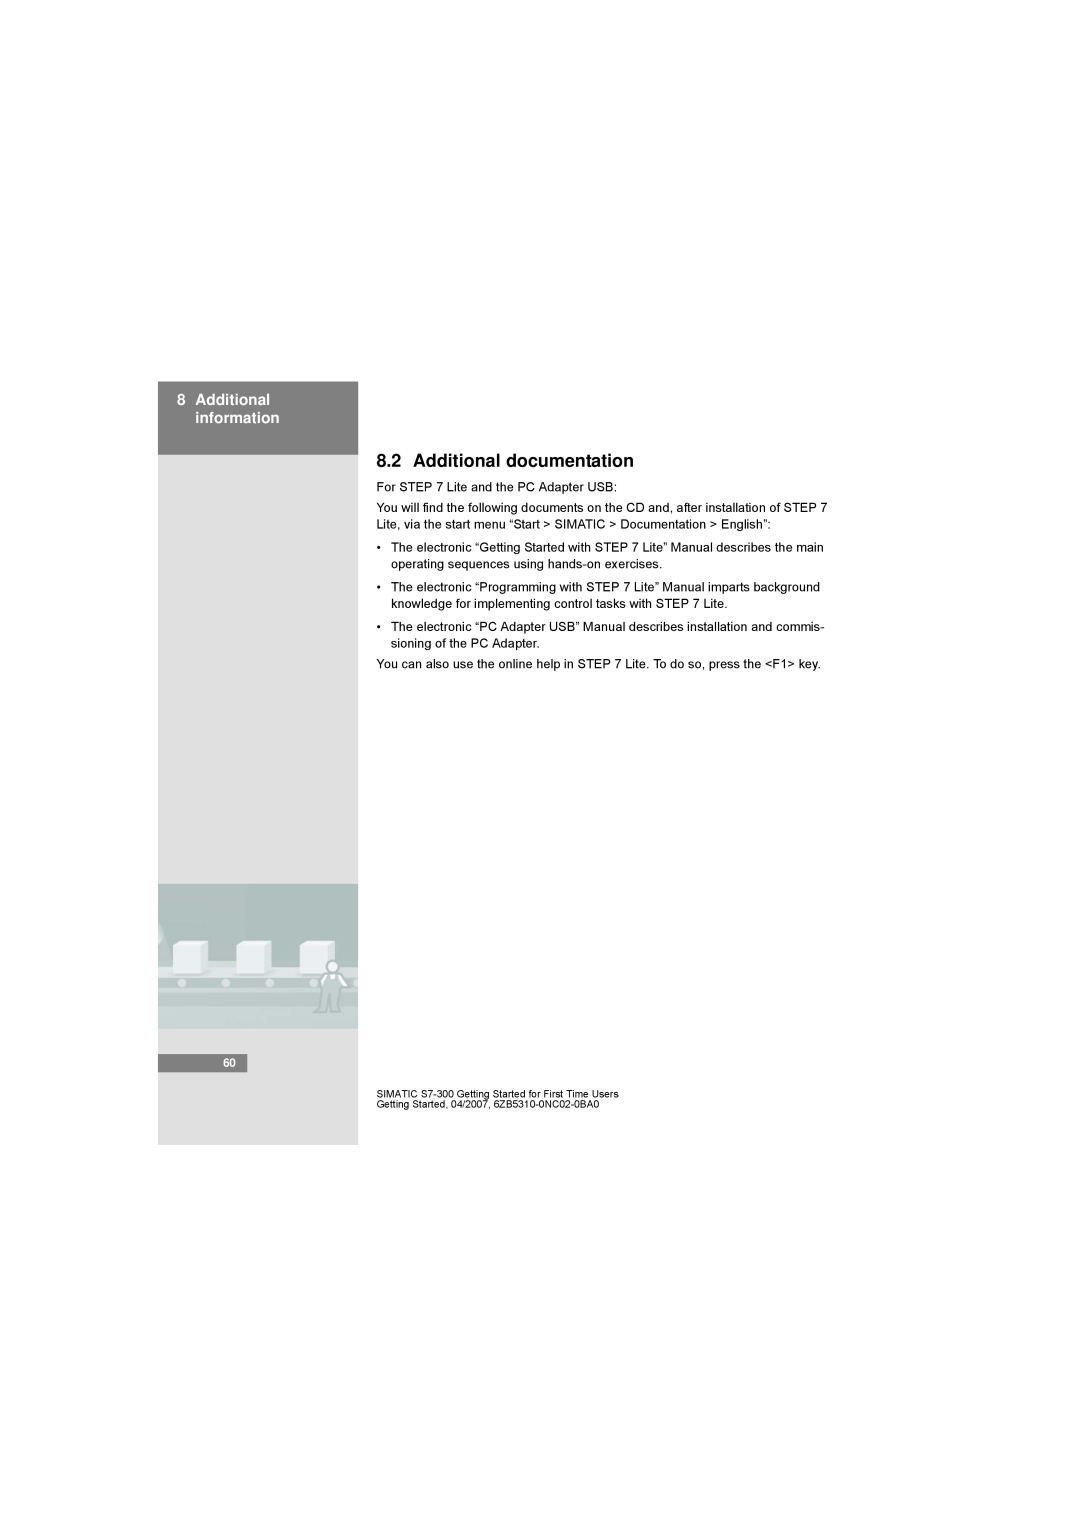 Siemens S7-300 manual Additional documentation, Additional information 